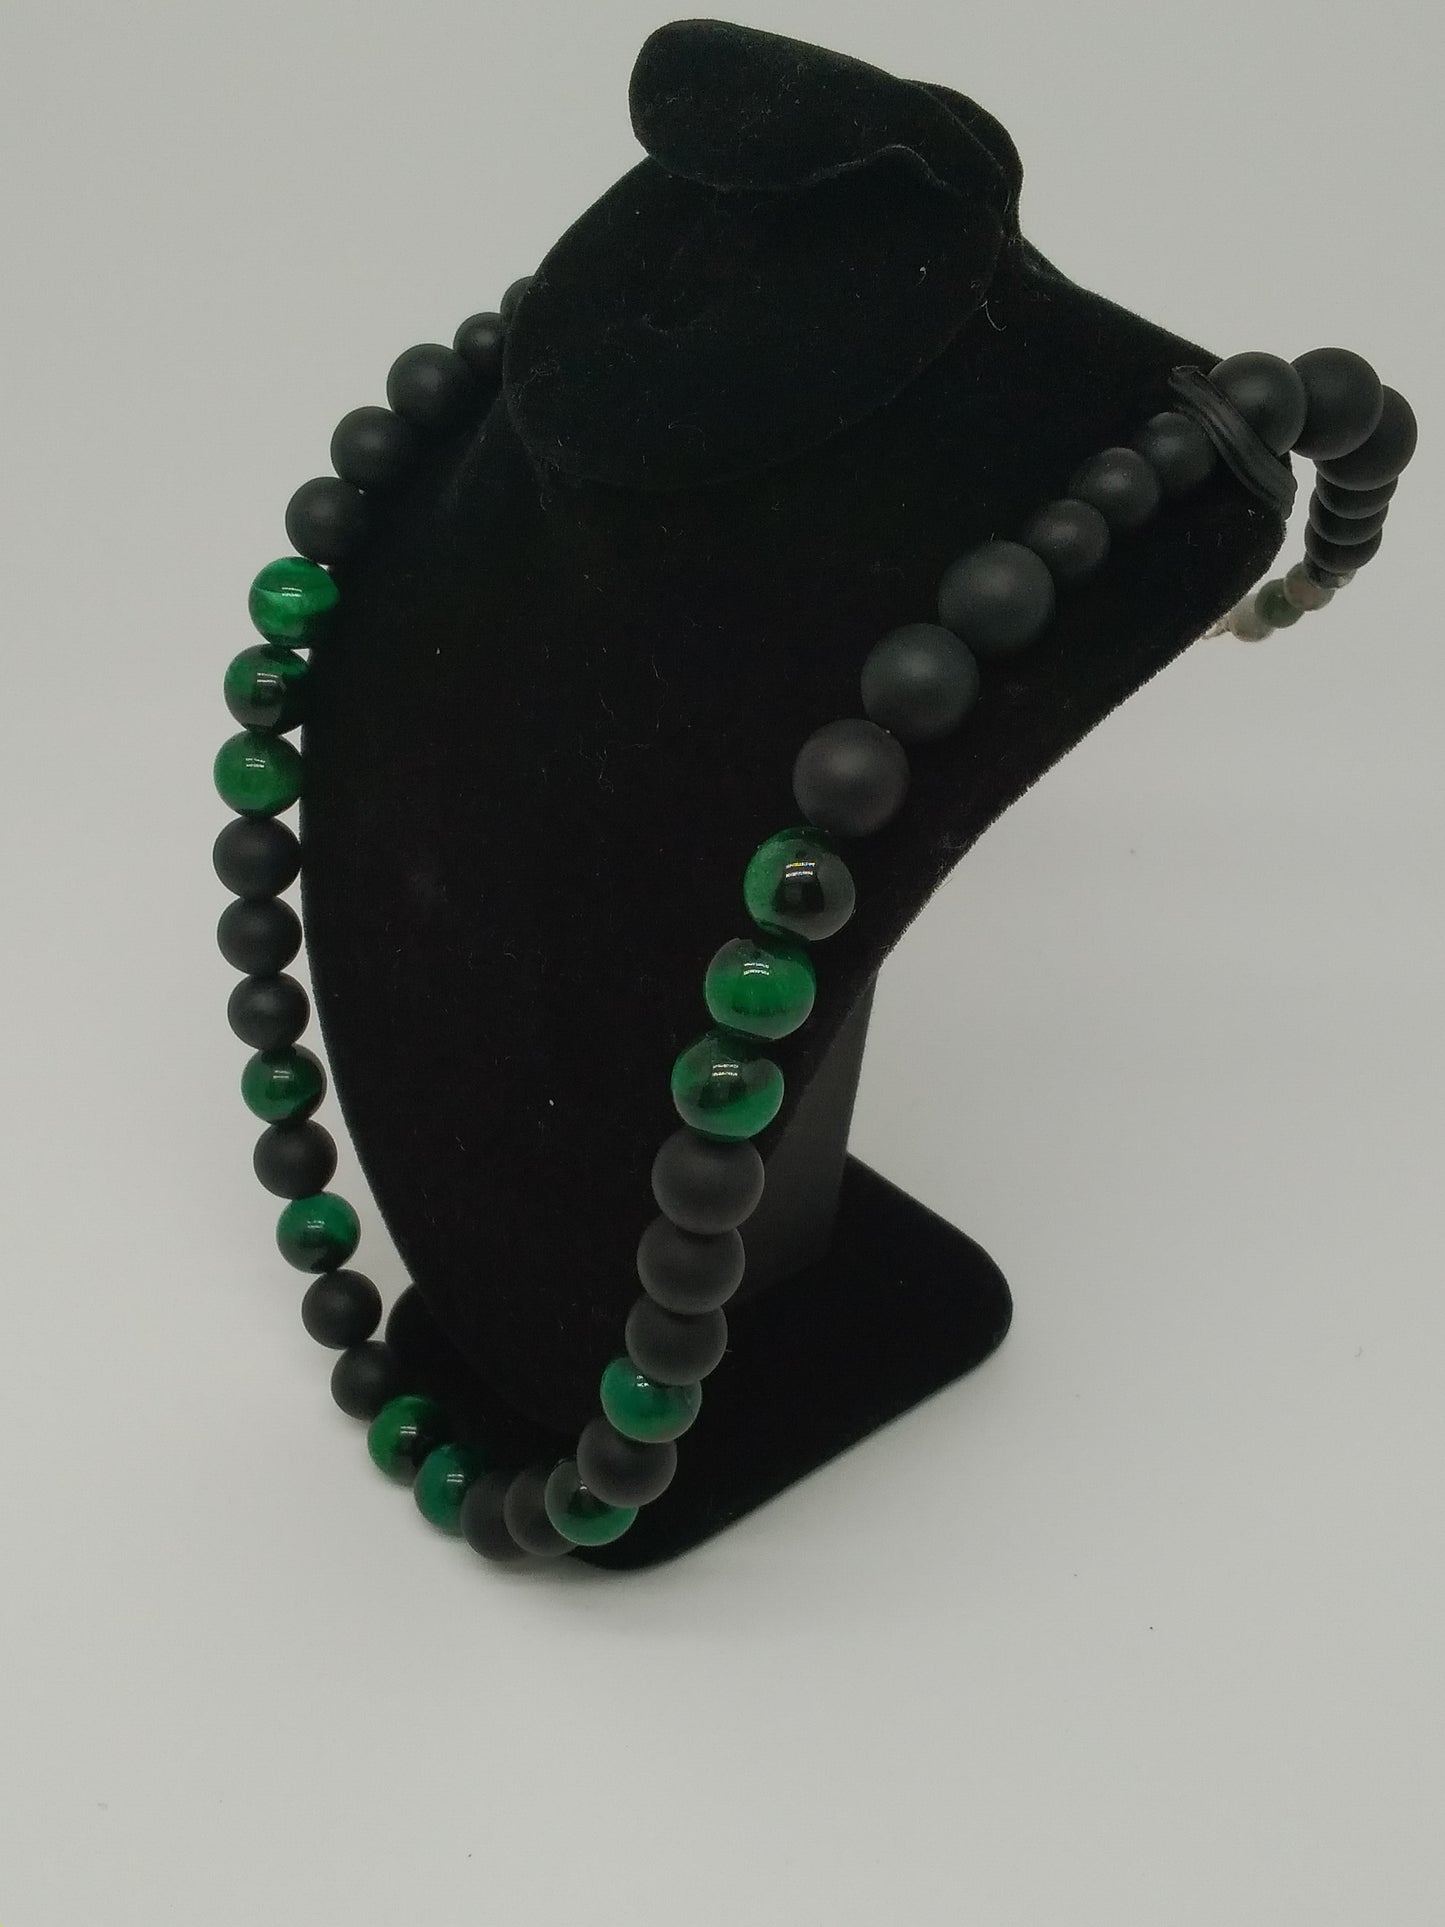 Green Tigers Eye and Black Onyx Gemstone Beaded Necklace (Unisex)